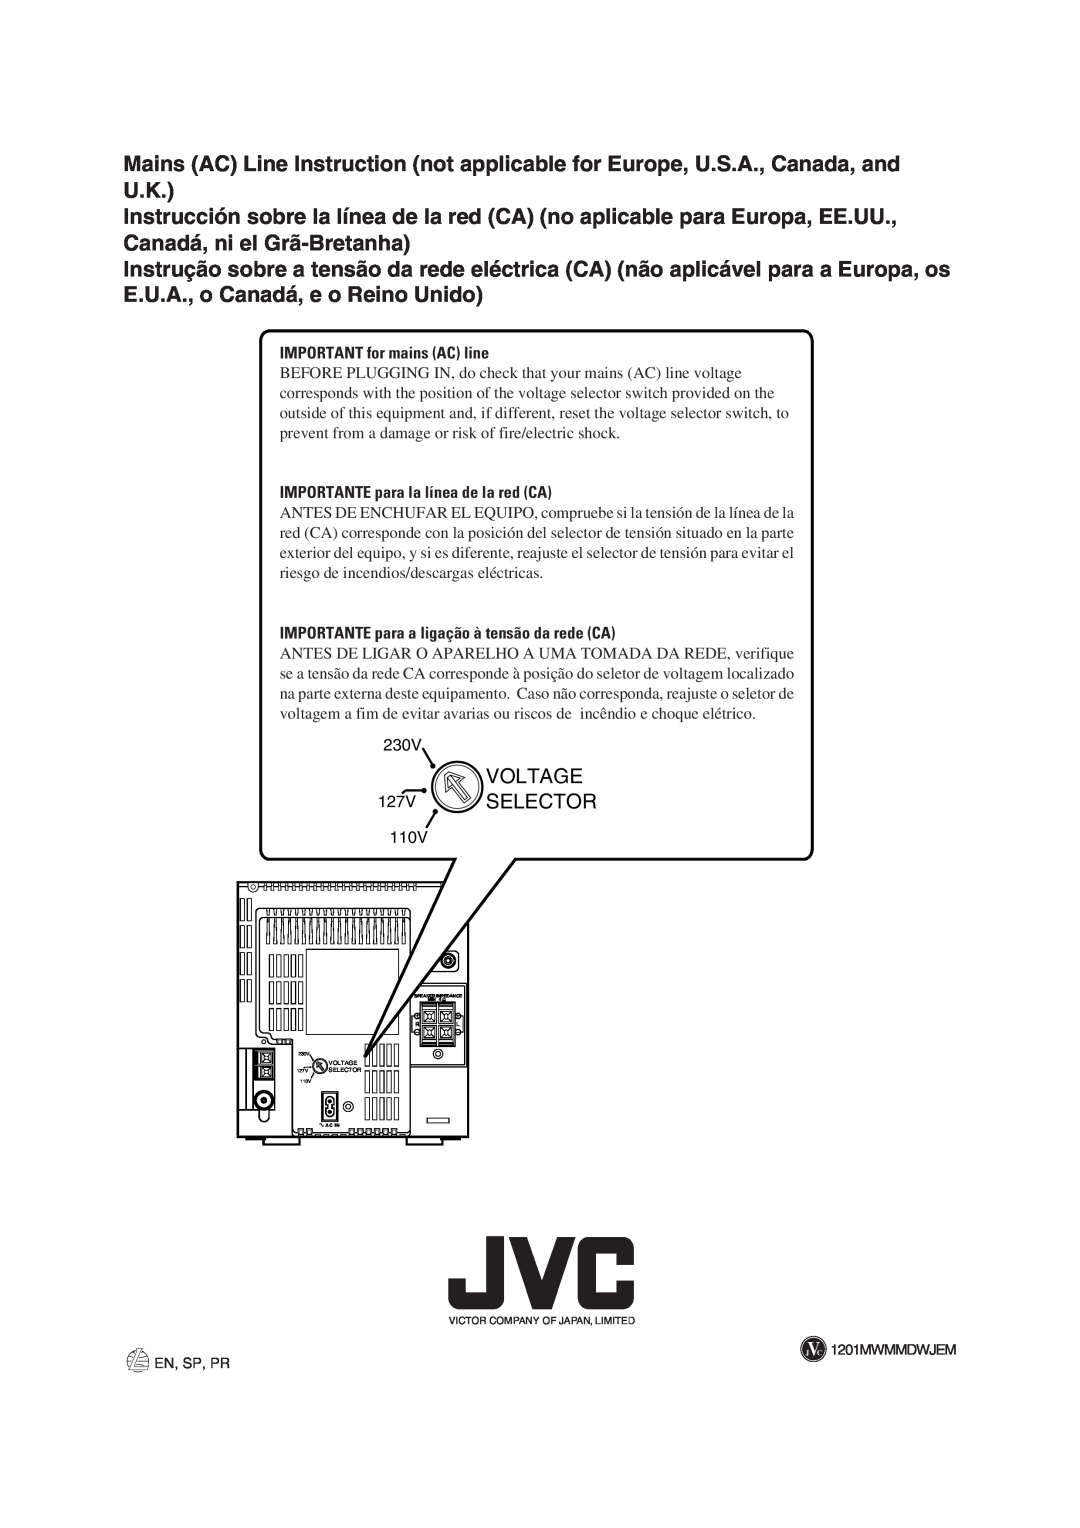 JVC UX-A52 En, Sp, Pr, IMPORTANT for mains AC line, IMPORTANTE para la línea de la red CA, 230V, Voltage, 127V, Selector 